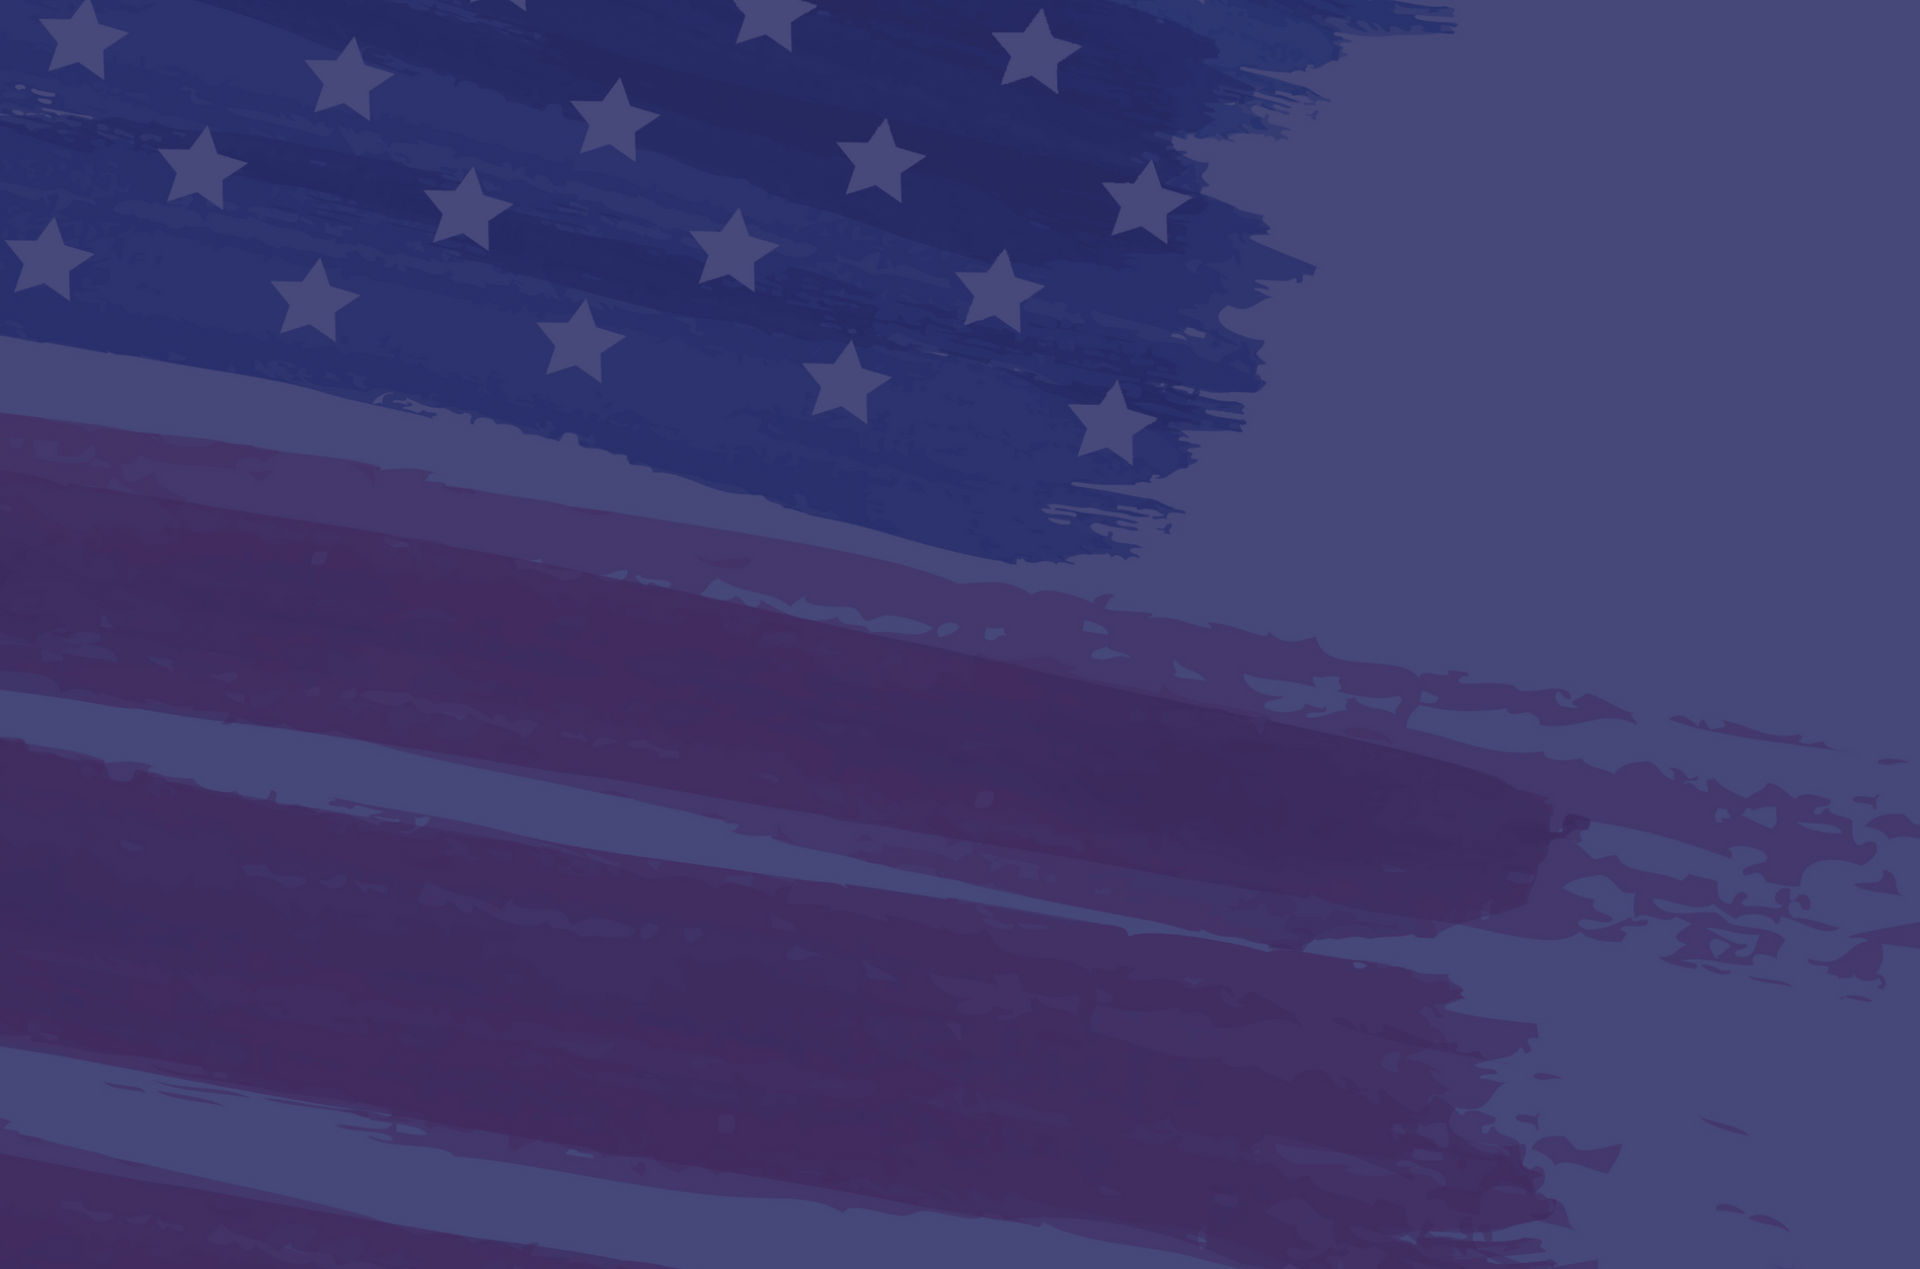 USA Flag Background Image | AFA Service & Repair